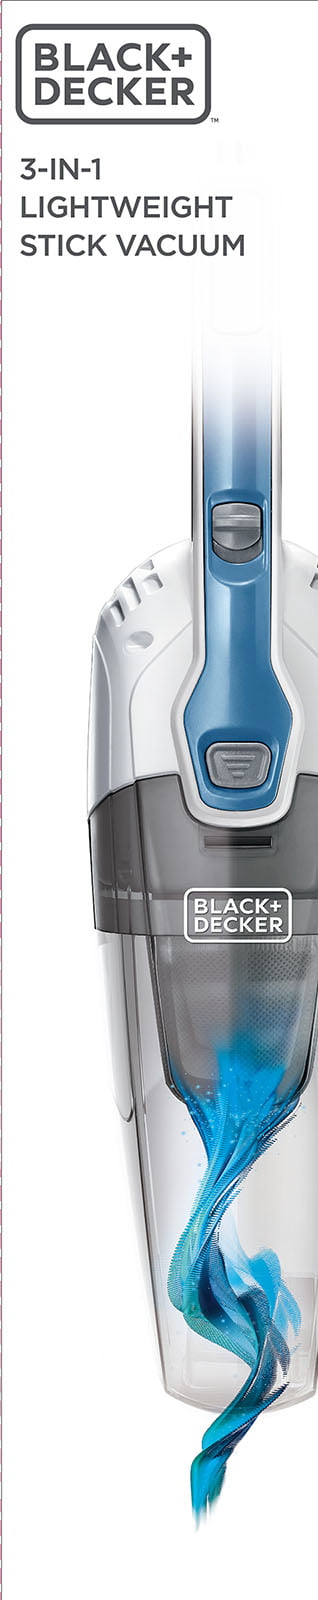 Black & Decker BDST1609 3-in-1 Corded Lightweight Handheld Cleaner & Stick  Vacuum Cleaner Review 